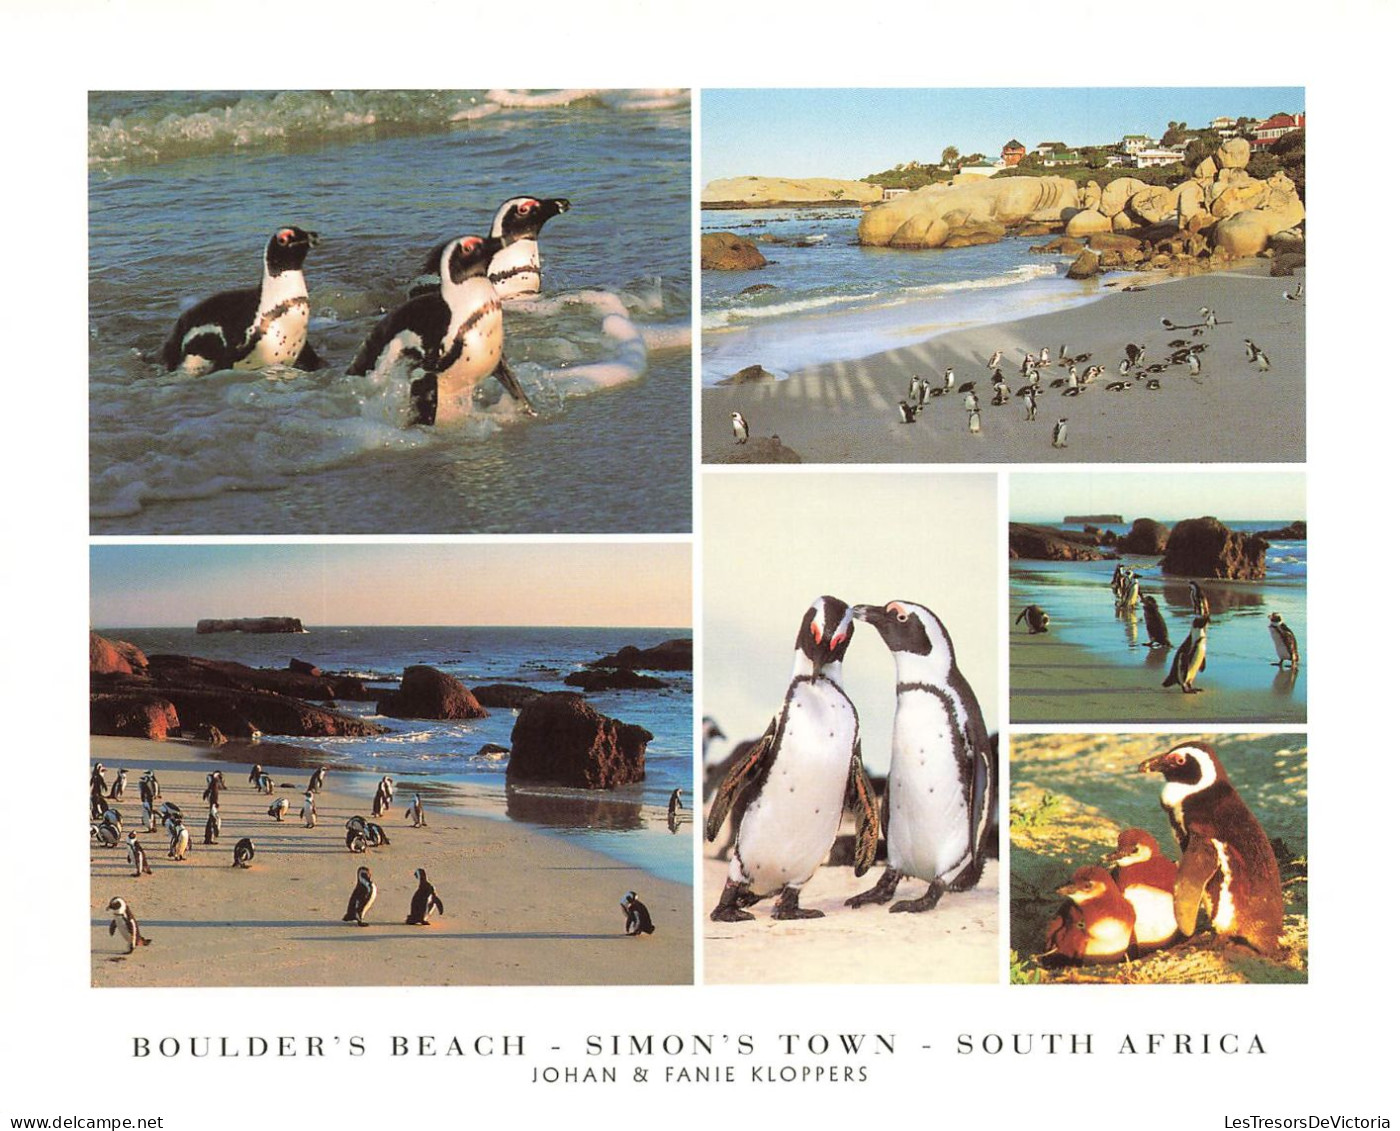 AFRIQUE DU SUD - Boulder's Beach - Simon's Town - South Africa - Johan & Fanie Kloppers - Pingouin - Carte Postale - South Africa